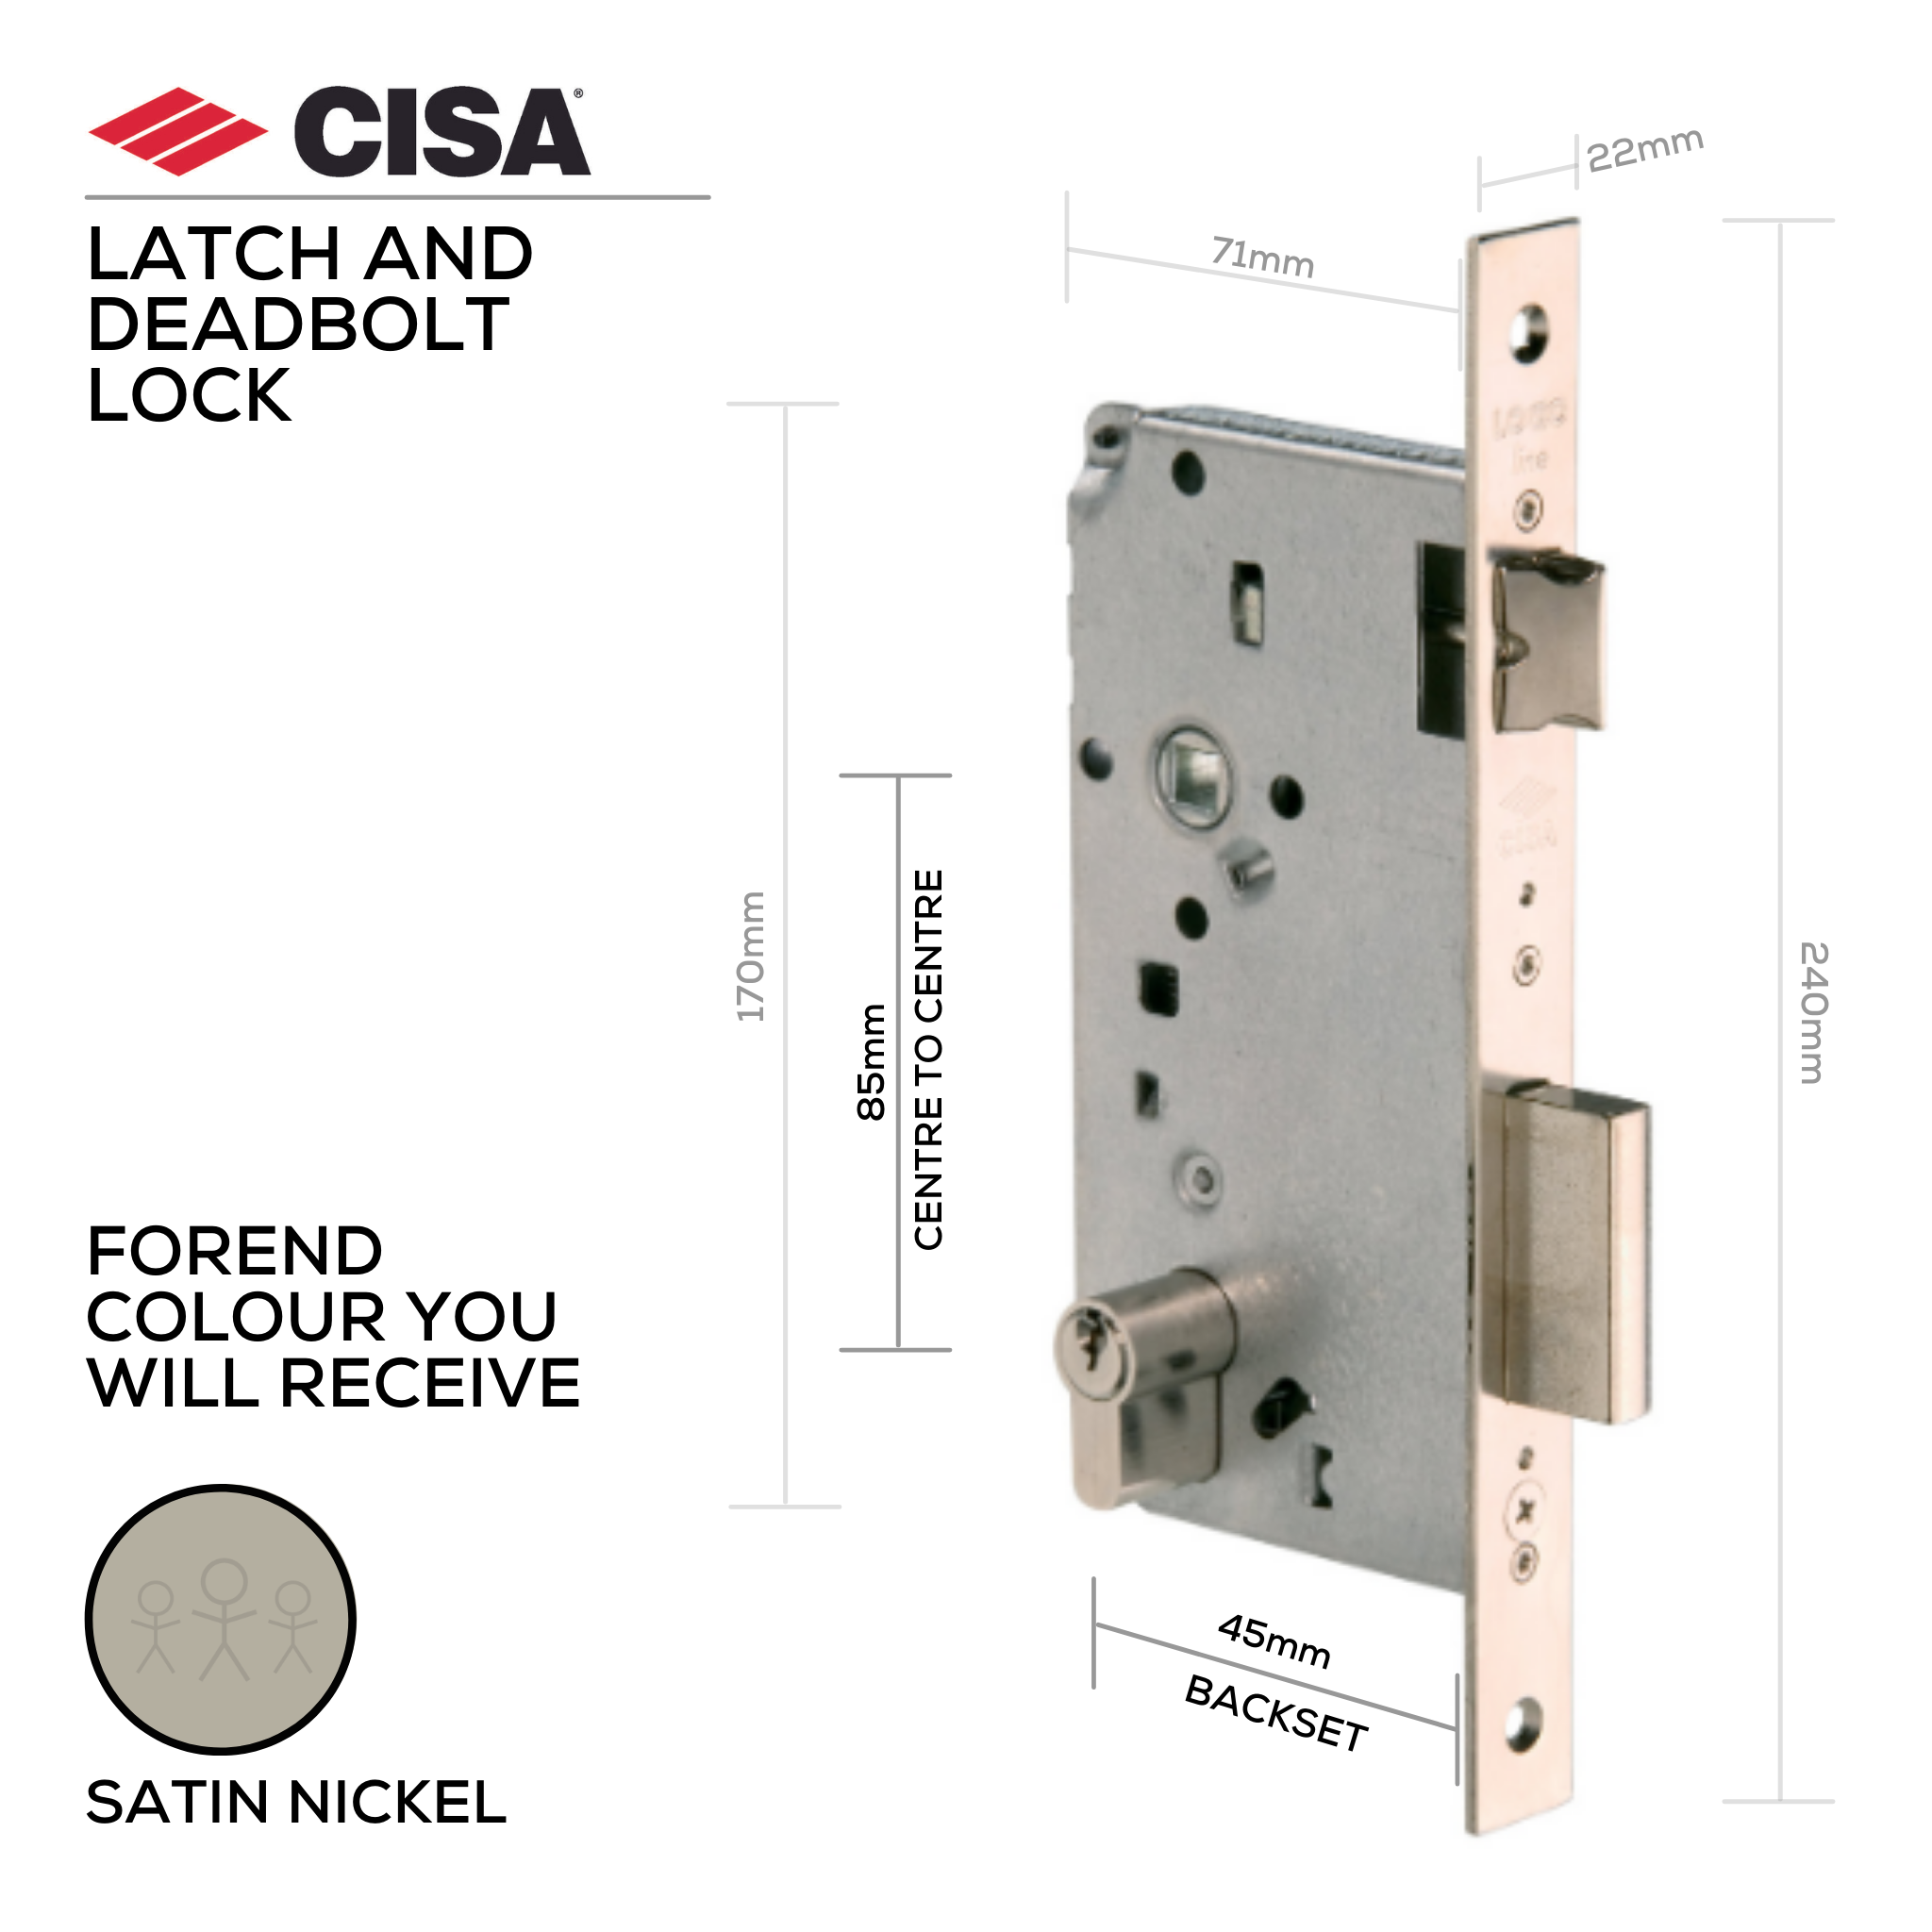 5C611-45-12, Latch & Deadbolt Lock, Euro Cylinder, Excluding Cylinder, 45mm (Backset), 85mm (ctc), Satin Nickel, CISA